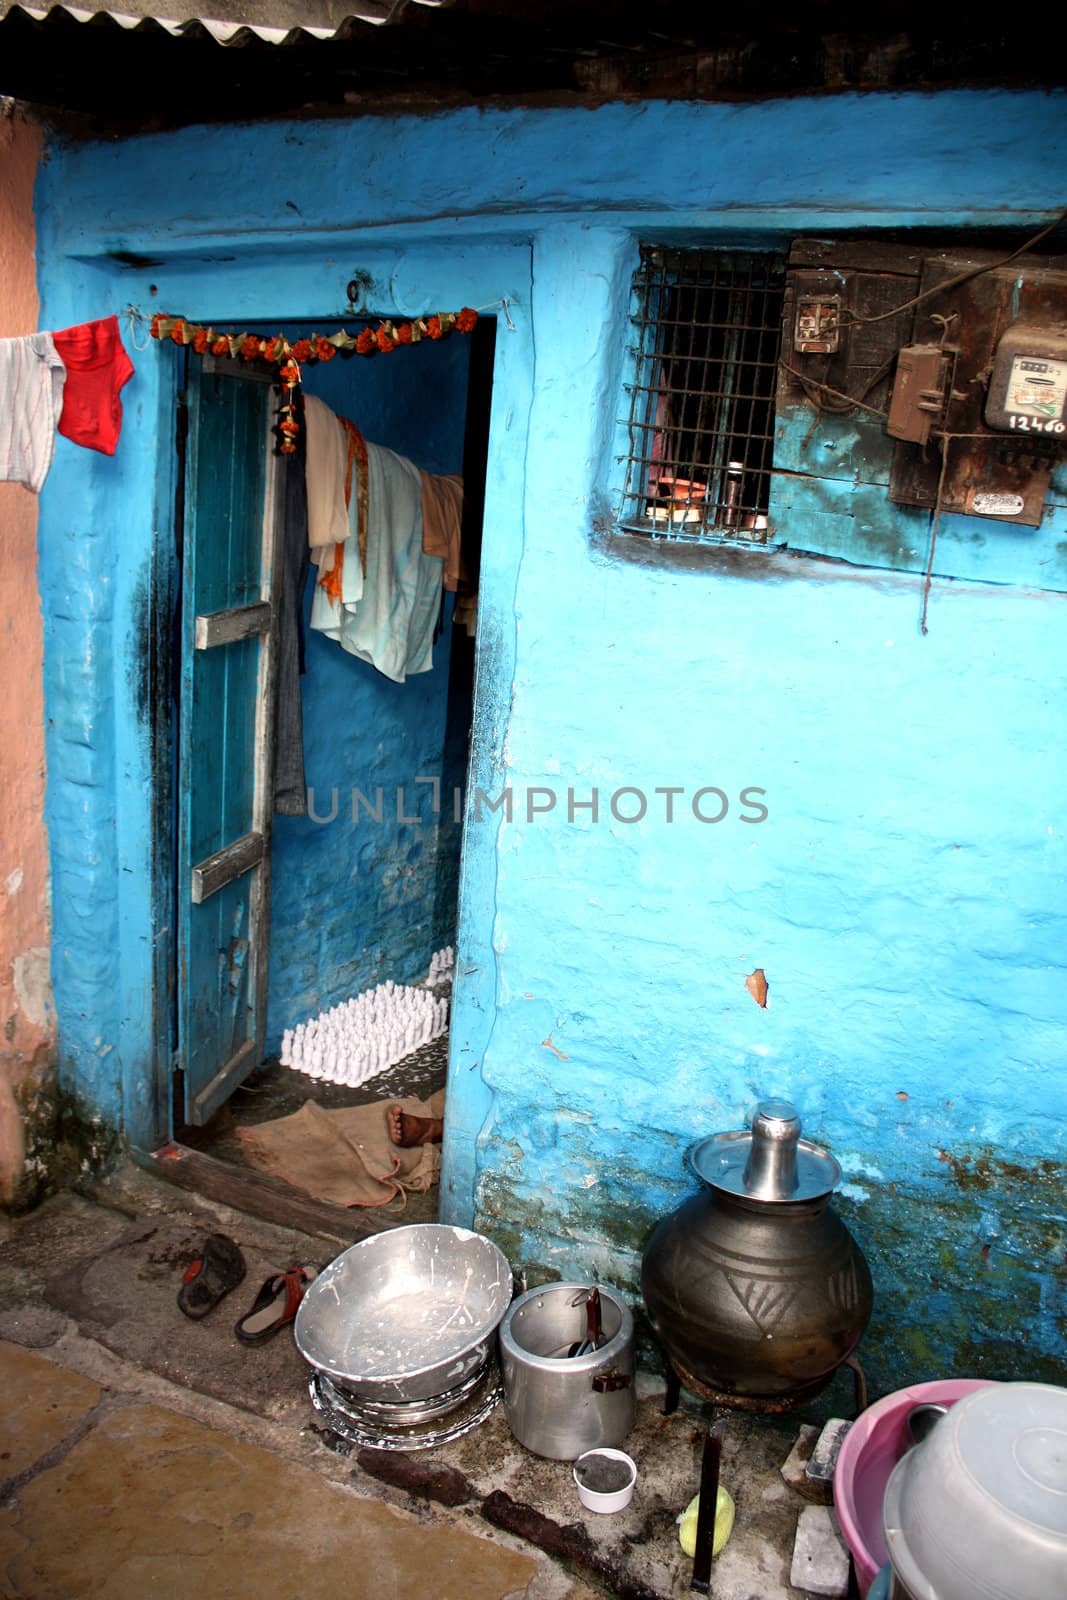 The entrance of a house in an Indian slum / ghetto.